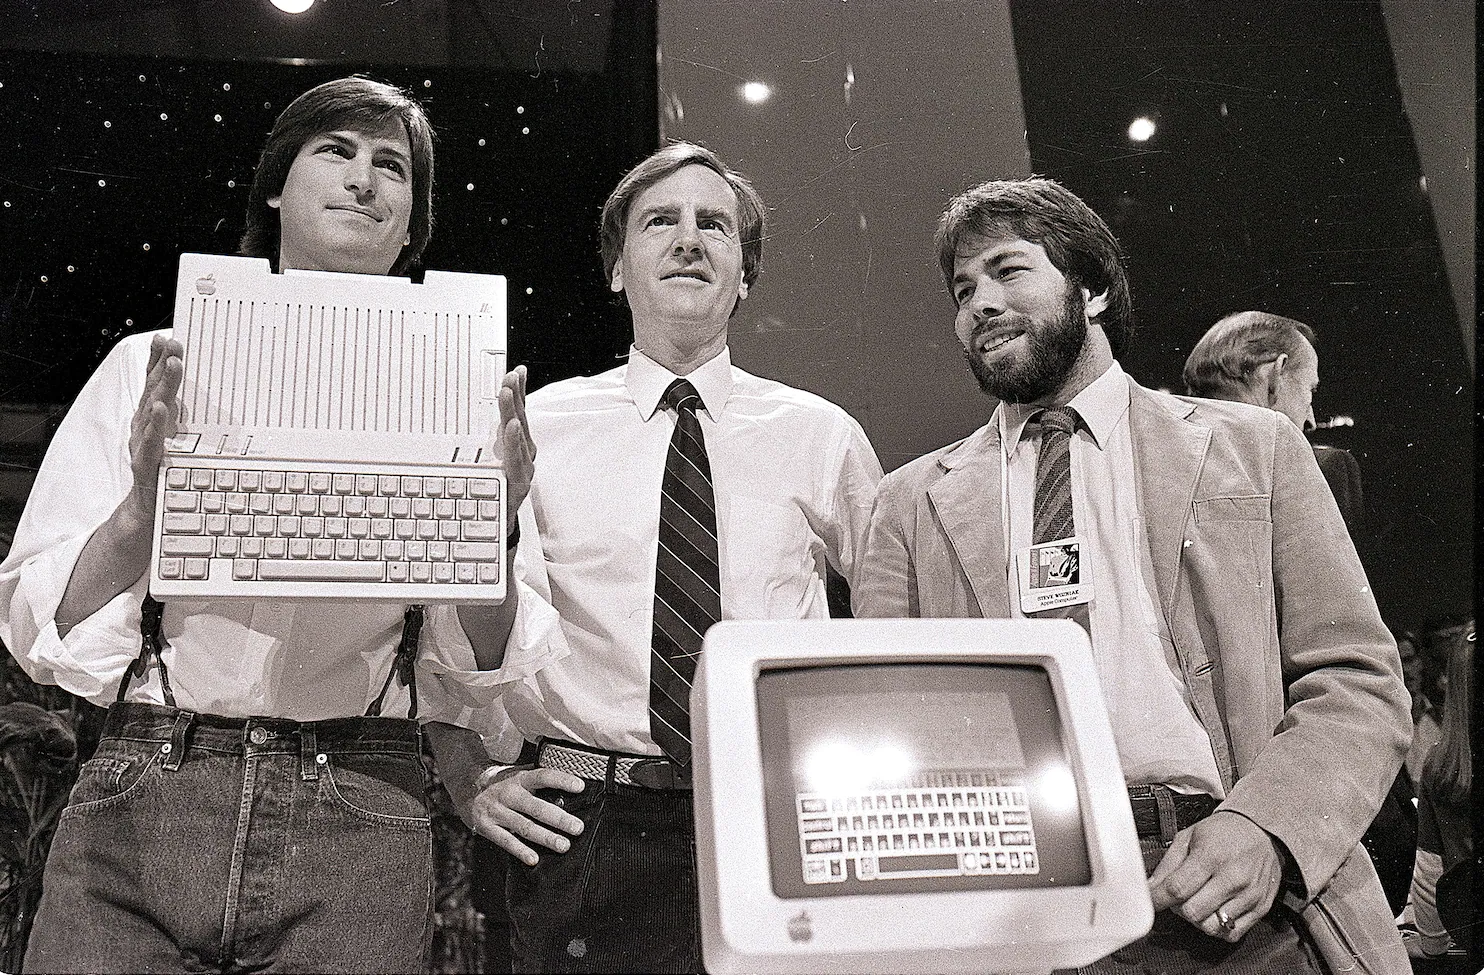 Steve Wozniak Rumors and Controversies